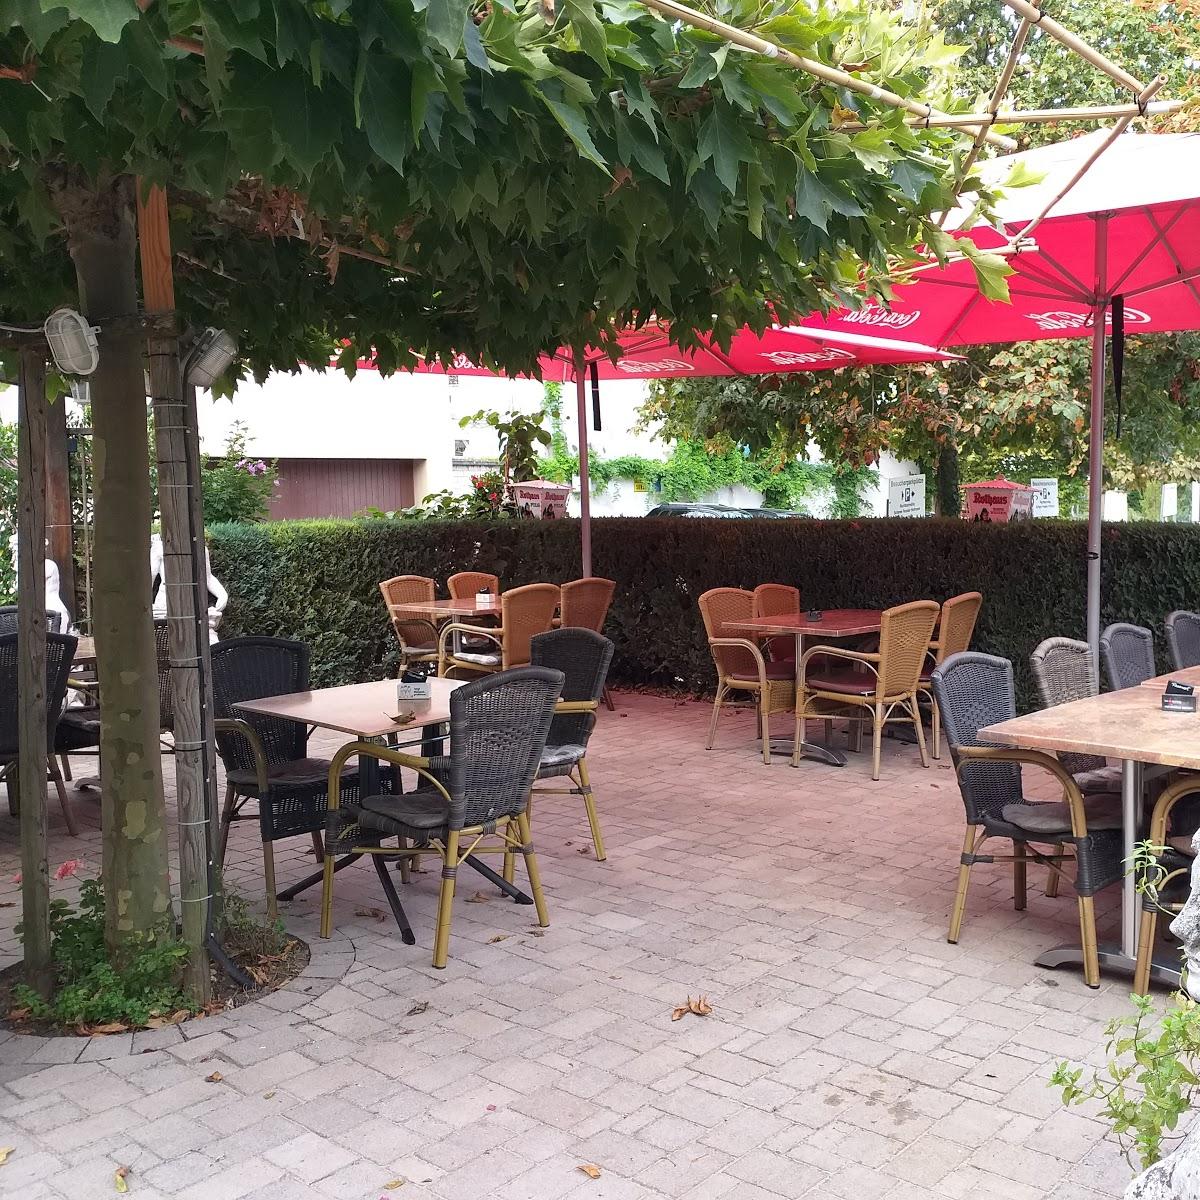 Restaurant "Corfu" in  Krozingen